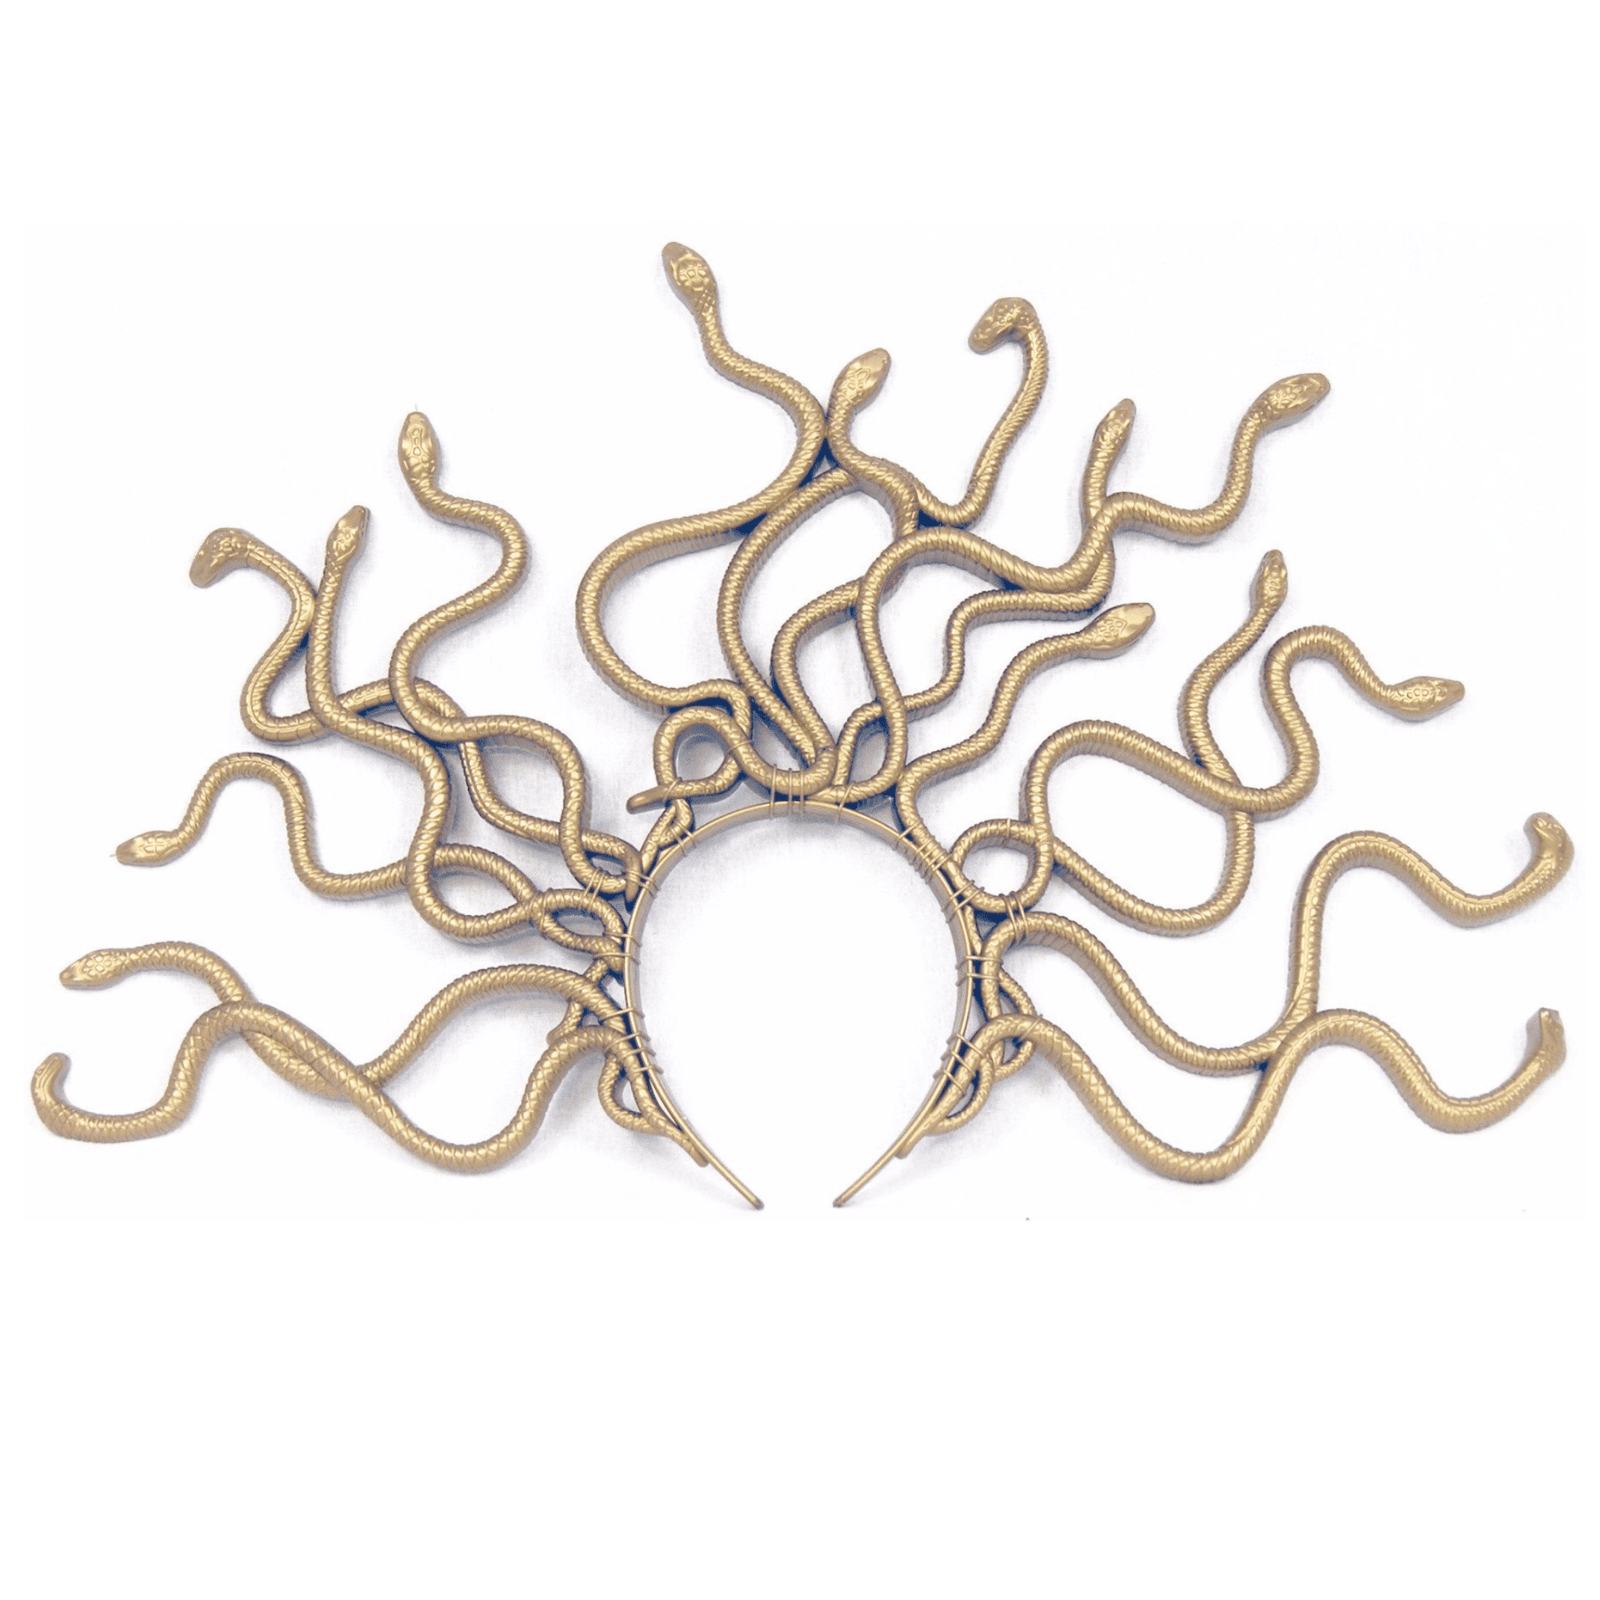 Featured image for “Medusa Headband (Gold Snake)”